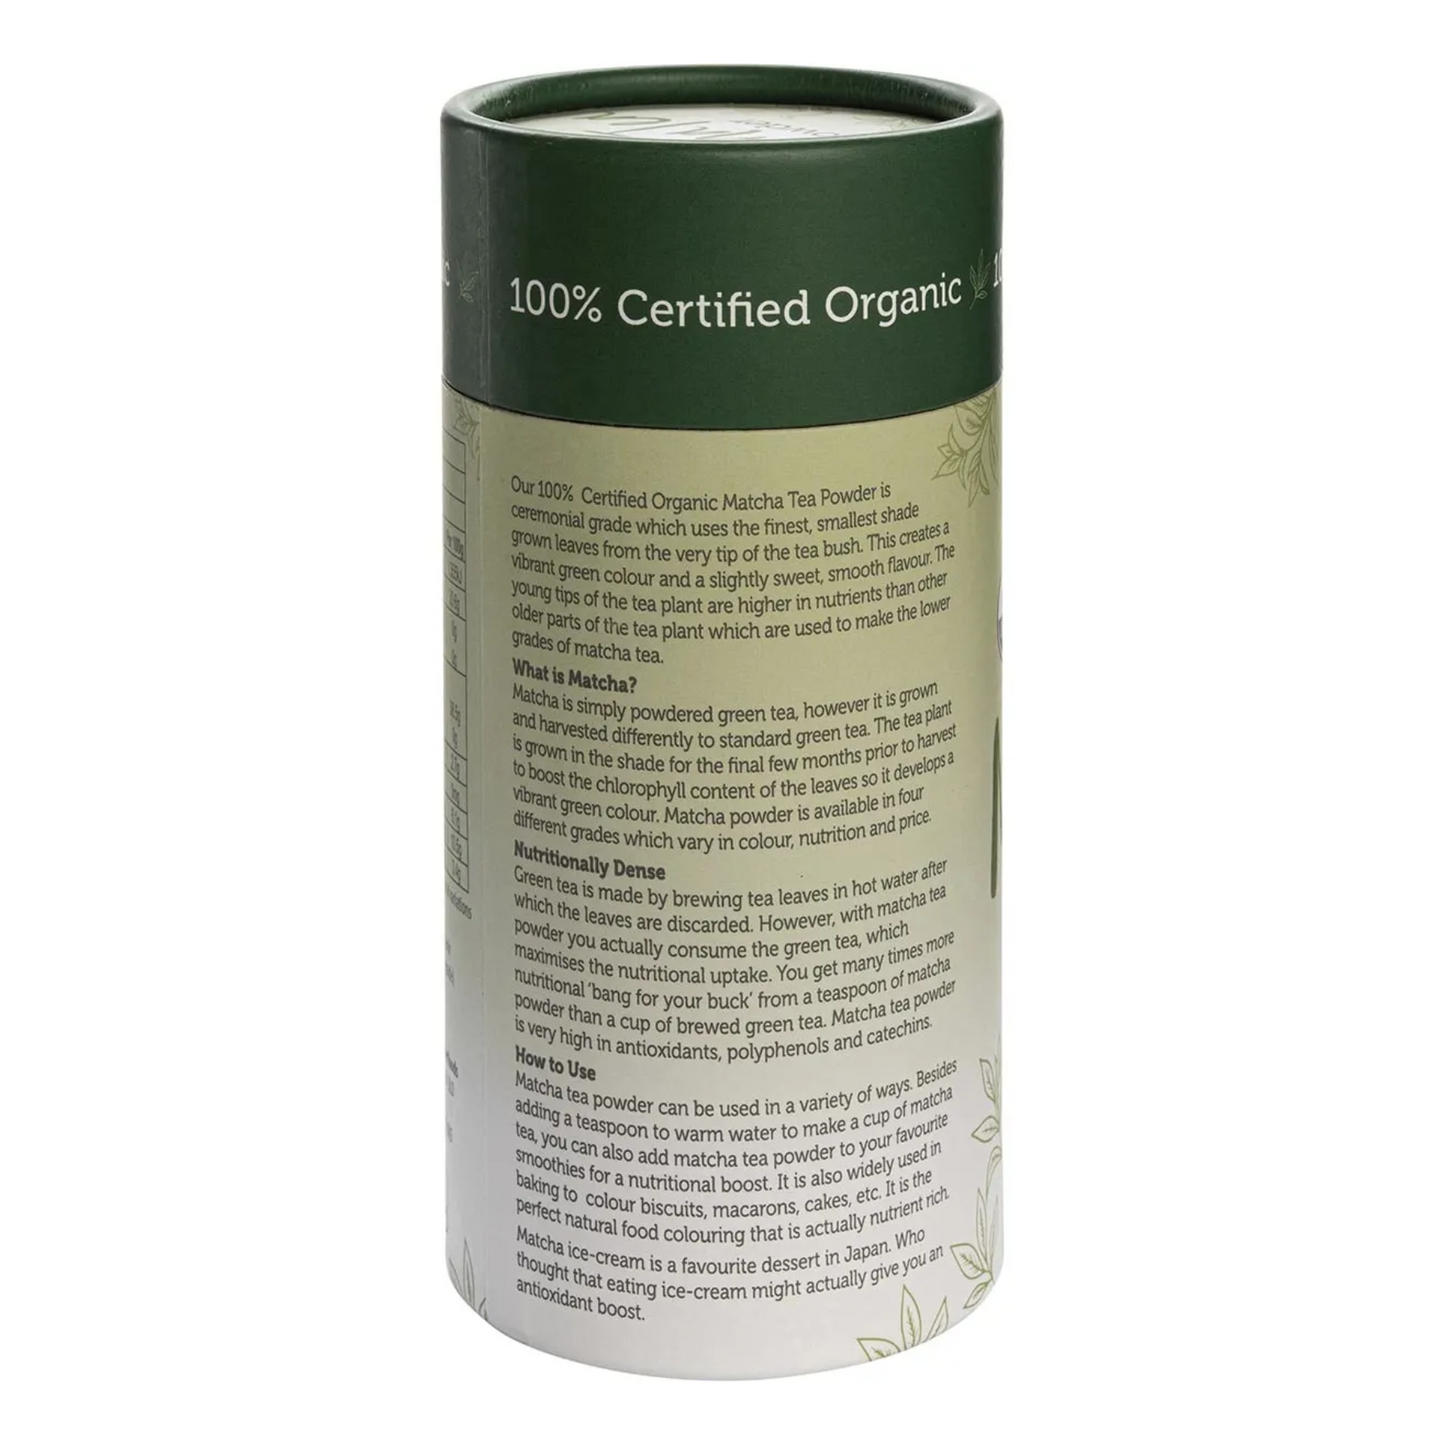 Dr Superfoods Certified Organic Matcha Tea Powder 125g, Ceremonial Grade